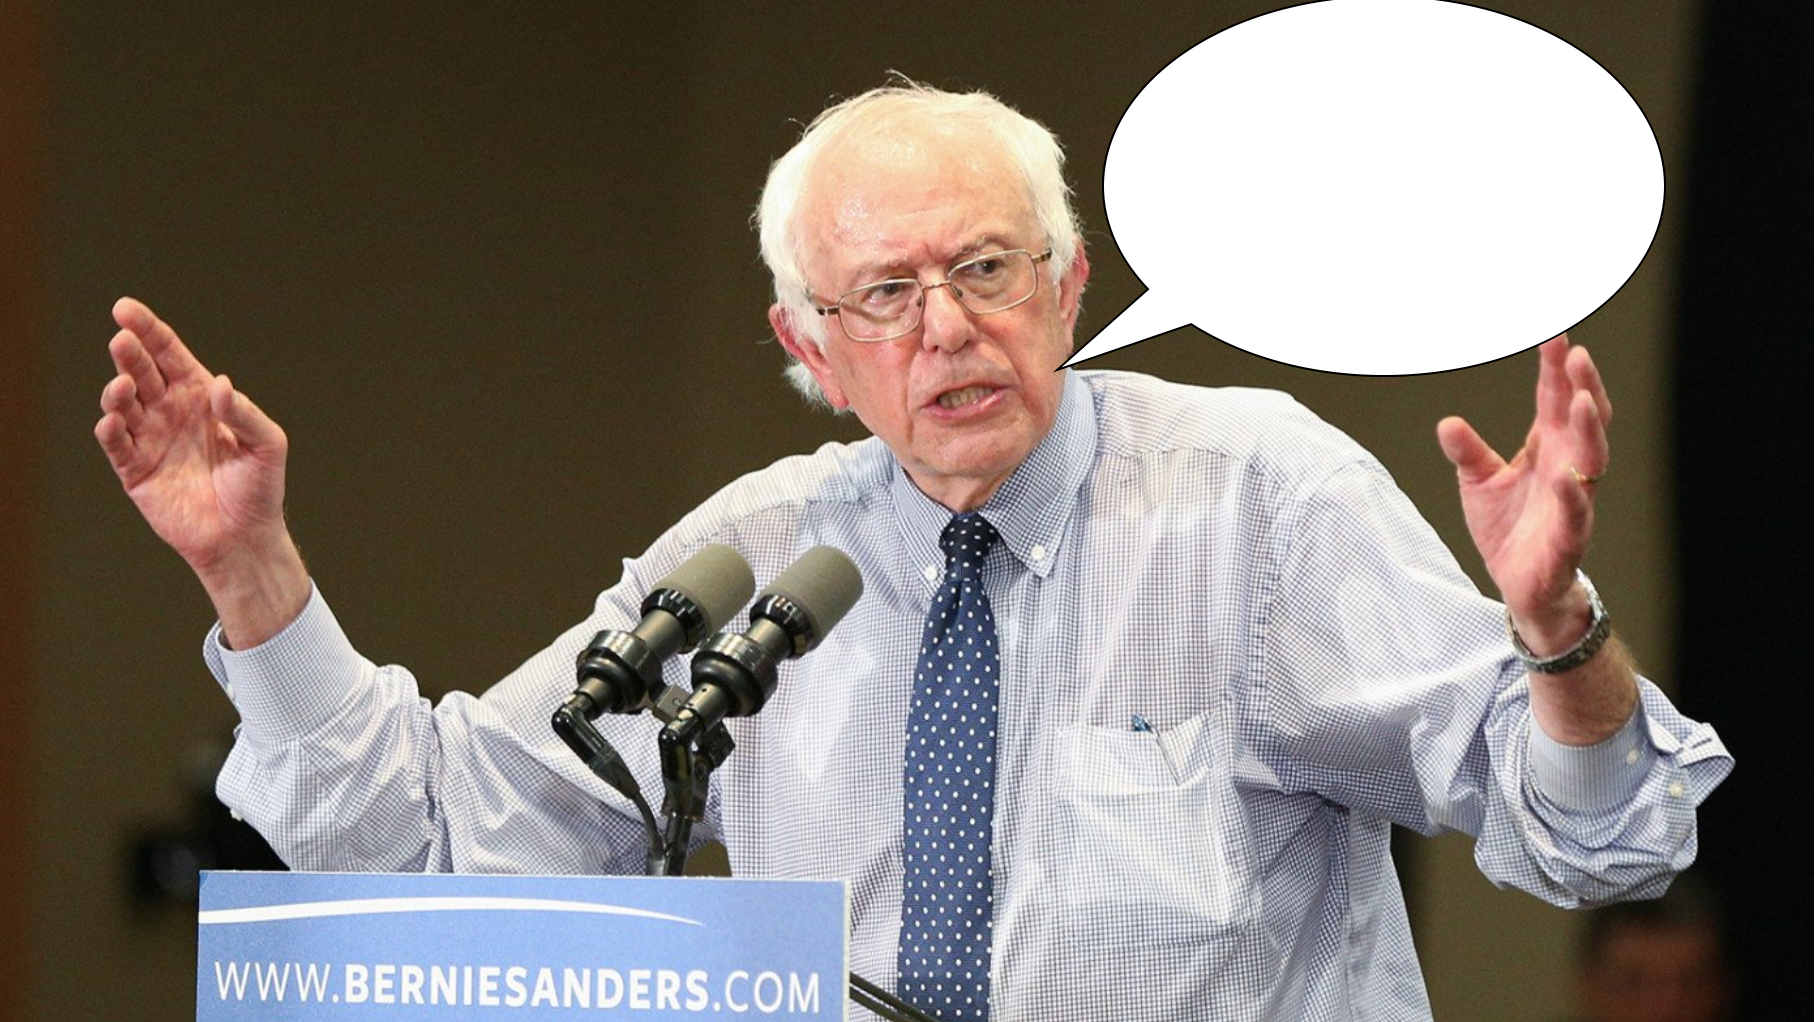 High Quality Bernie Sanders Blank Meme Template